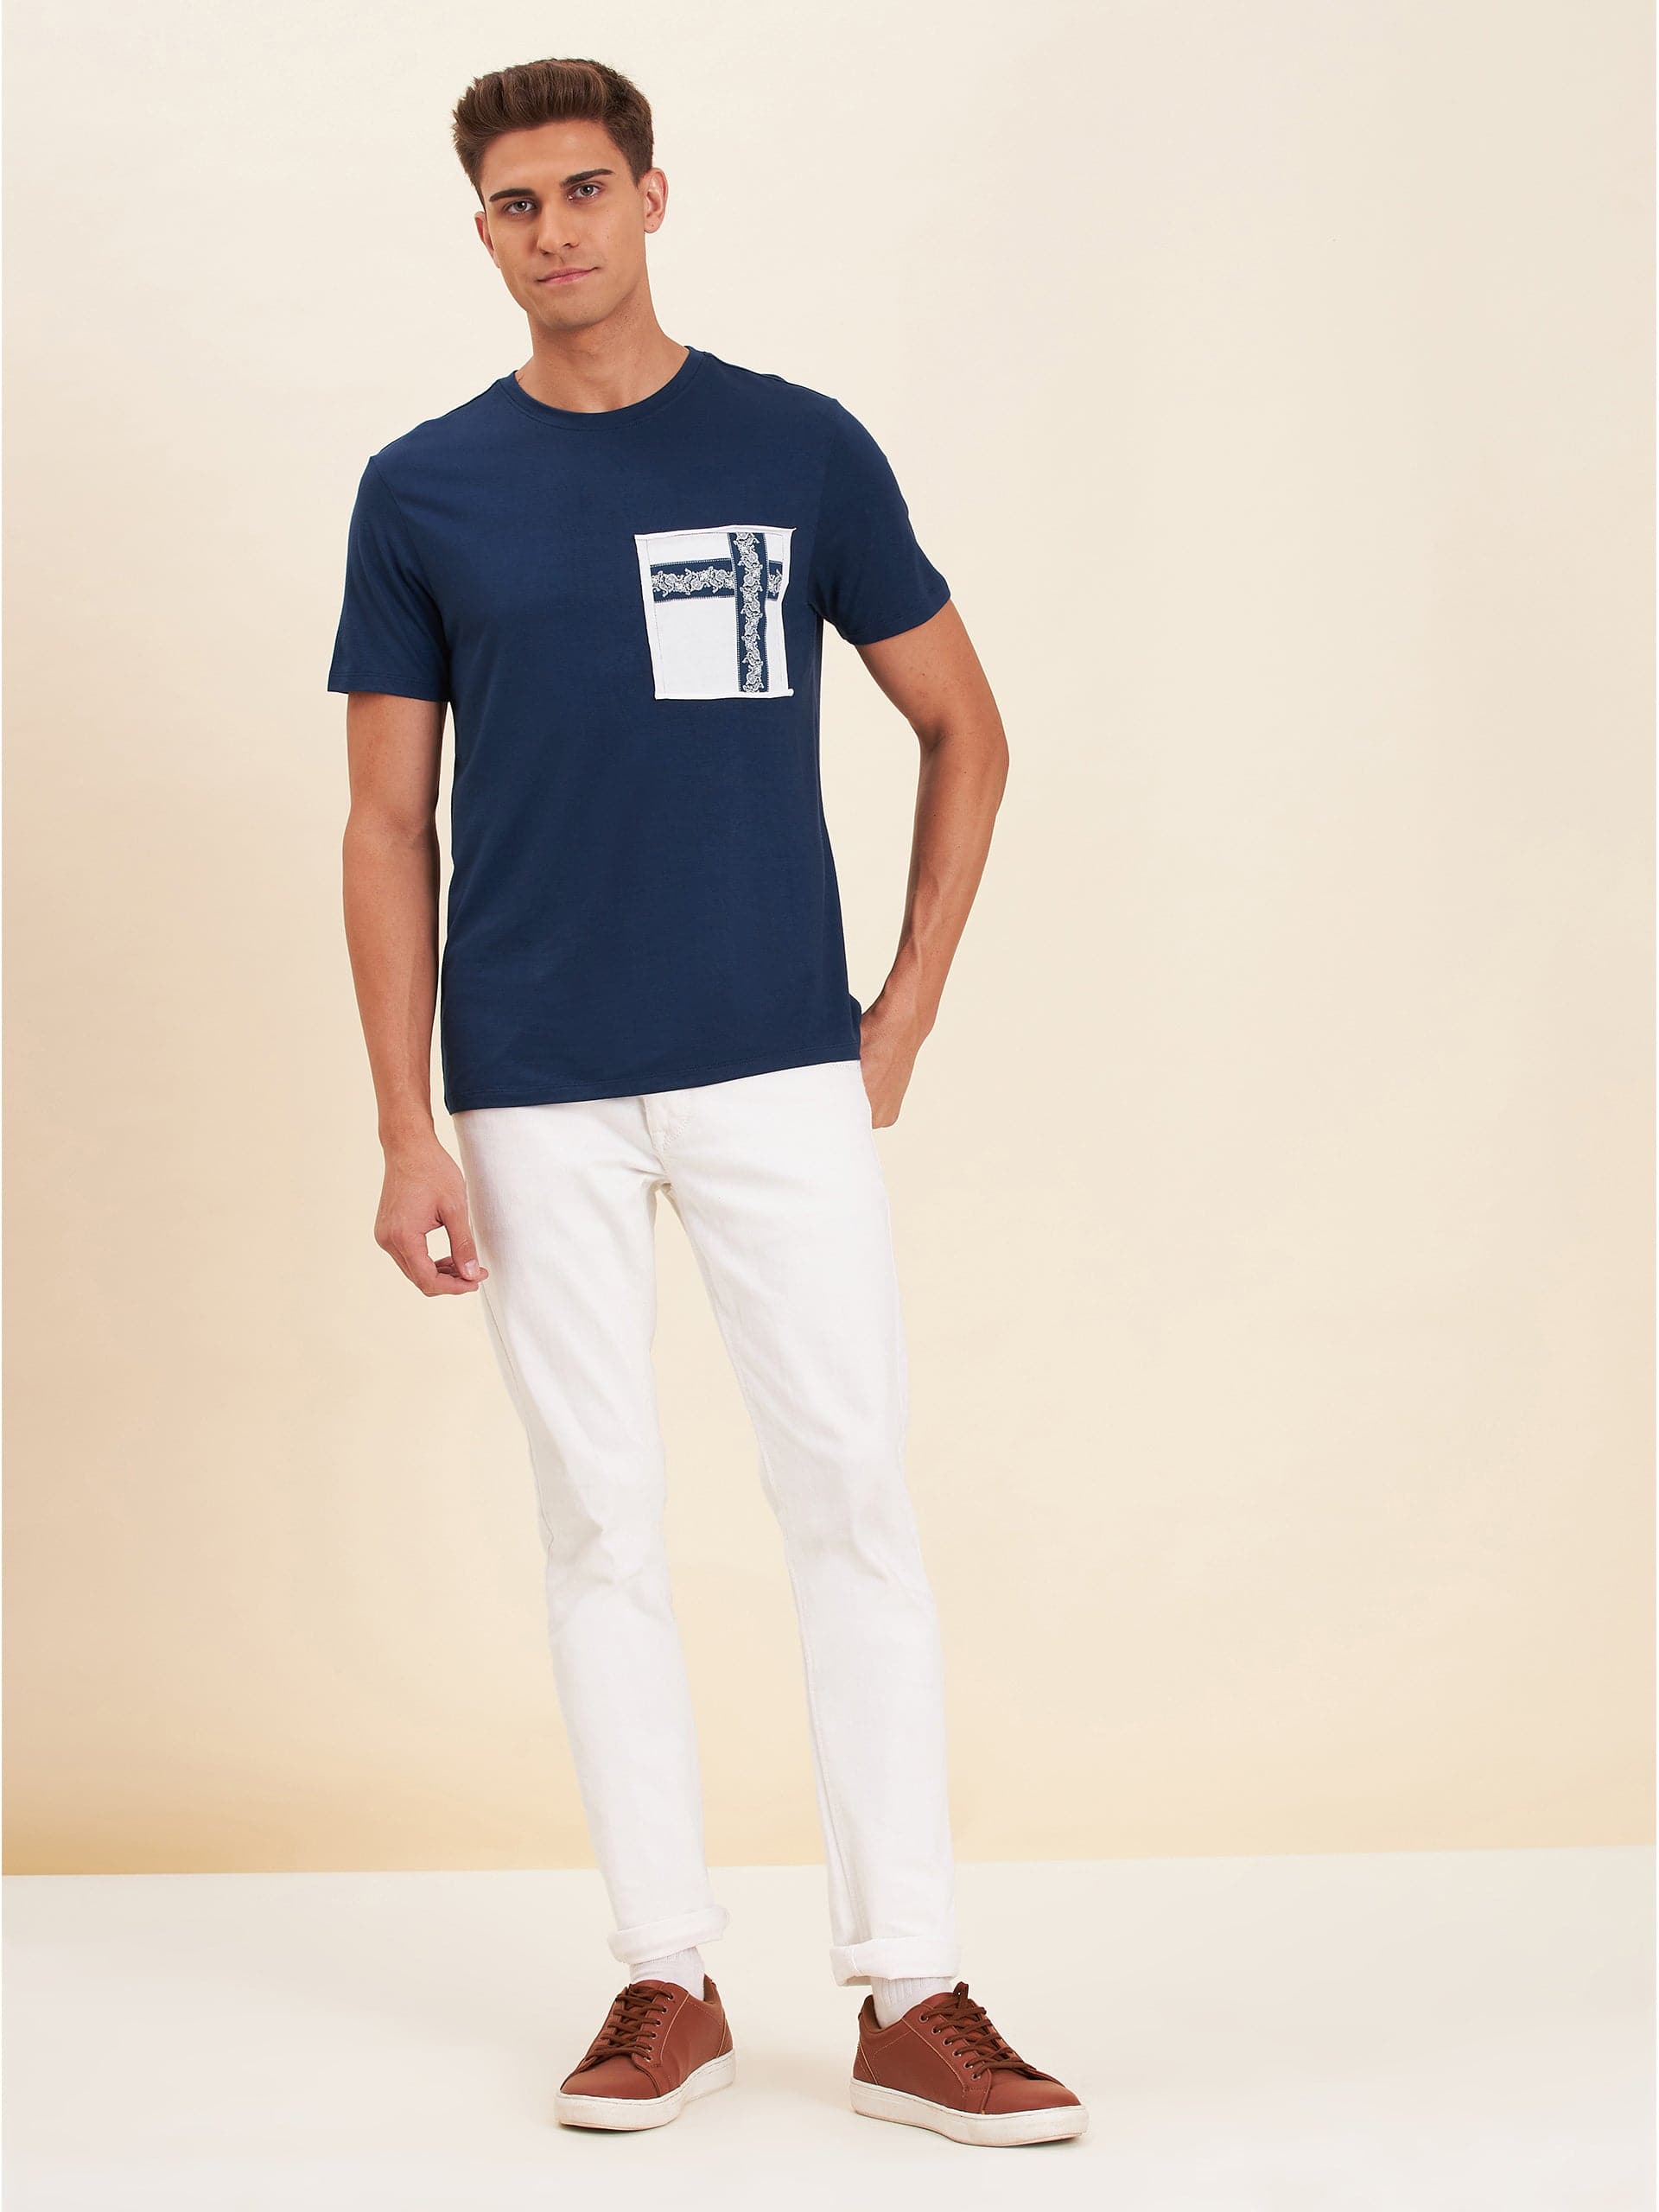 Men's Teal Blue Viscose Motif Print T-Shirt - LYUSH-MASCLN